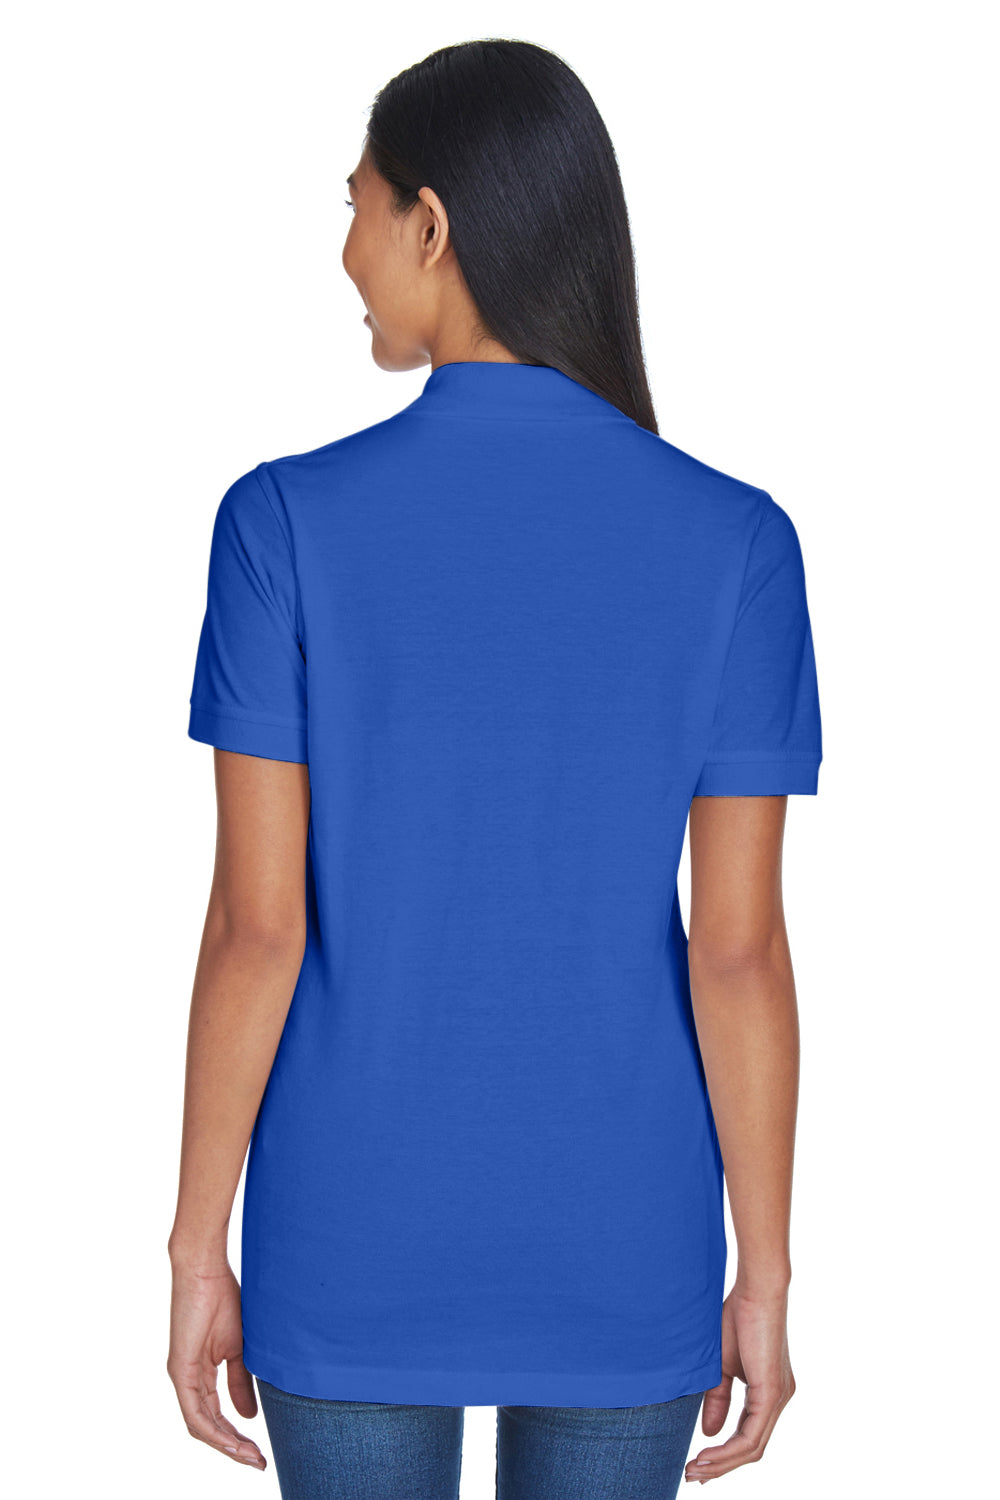 UltraClub 8530 Womens Classic Short Sleeve Polo Shirt Royal Blue Back